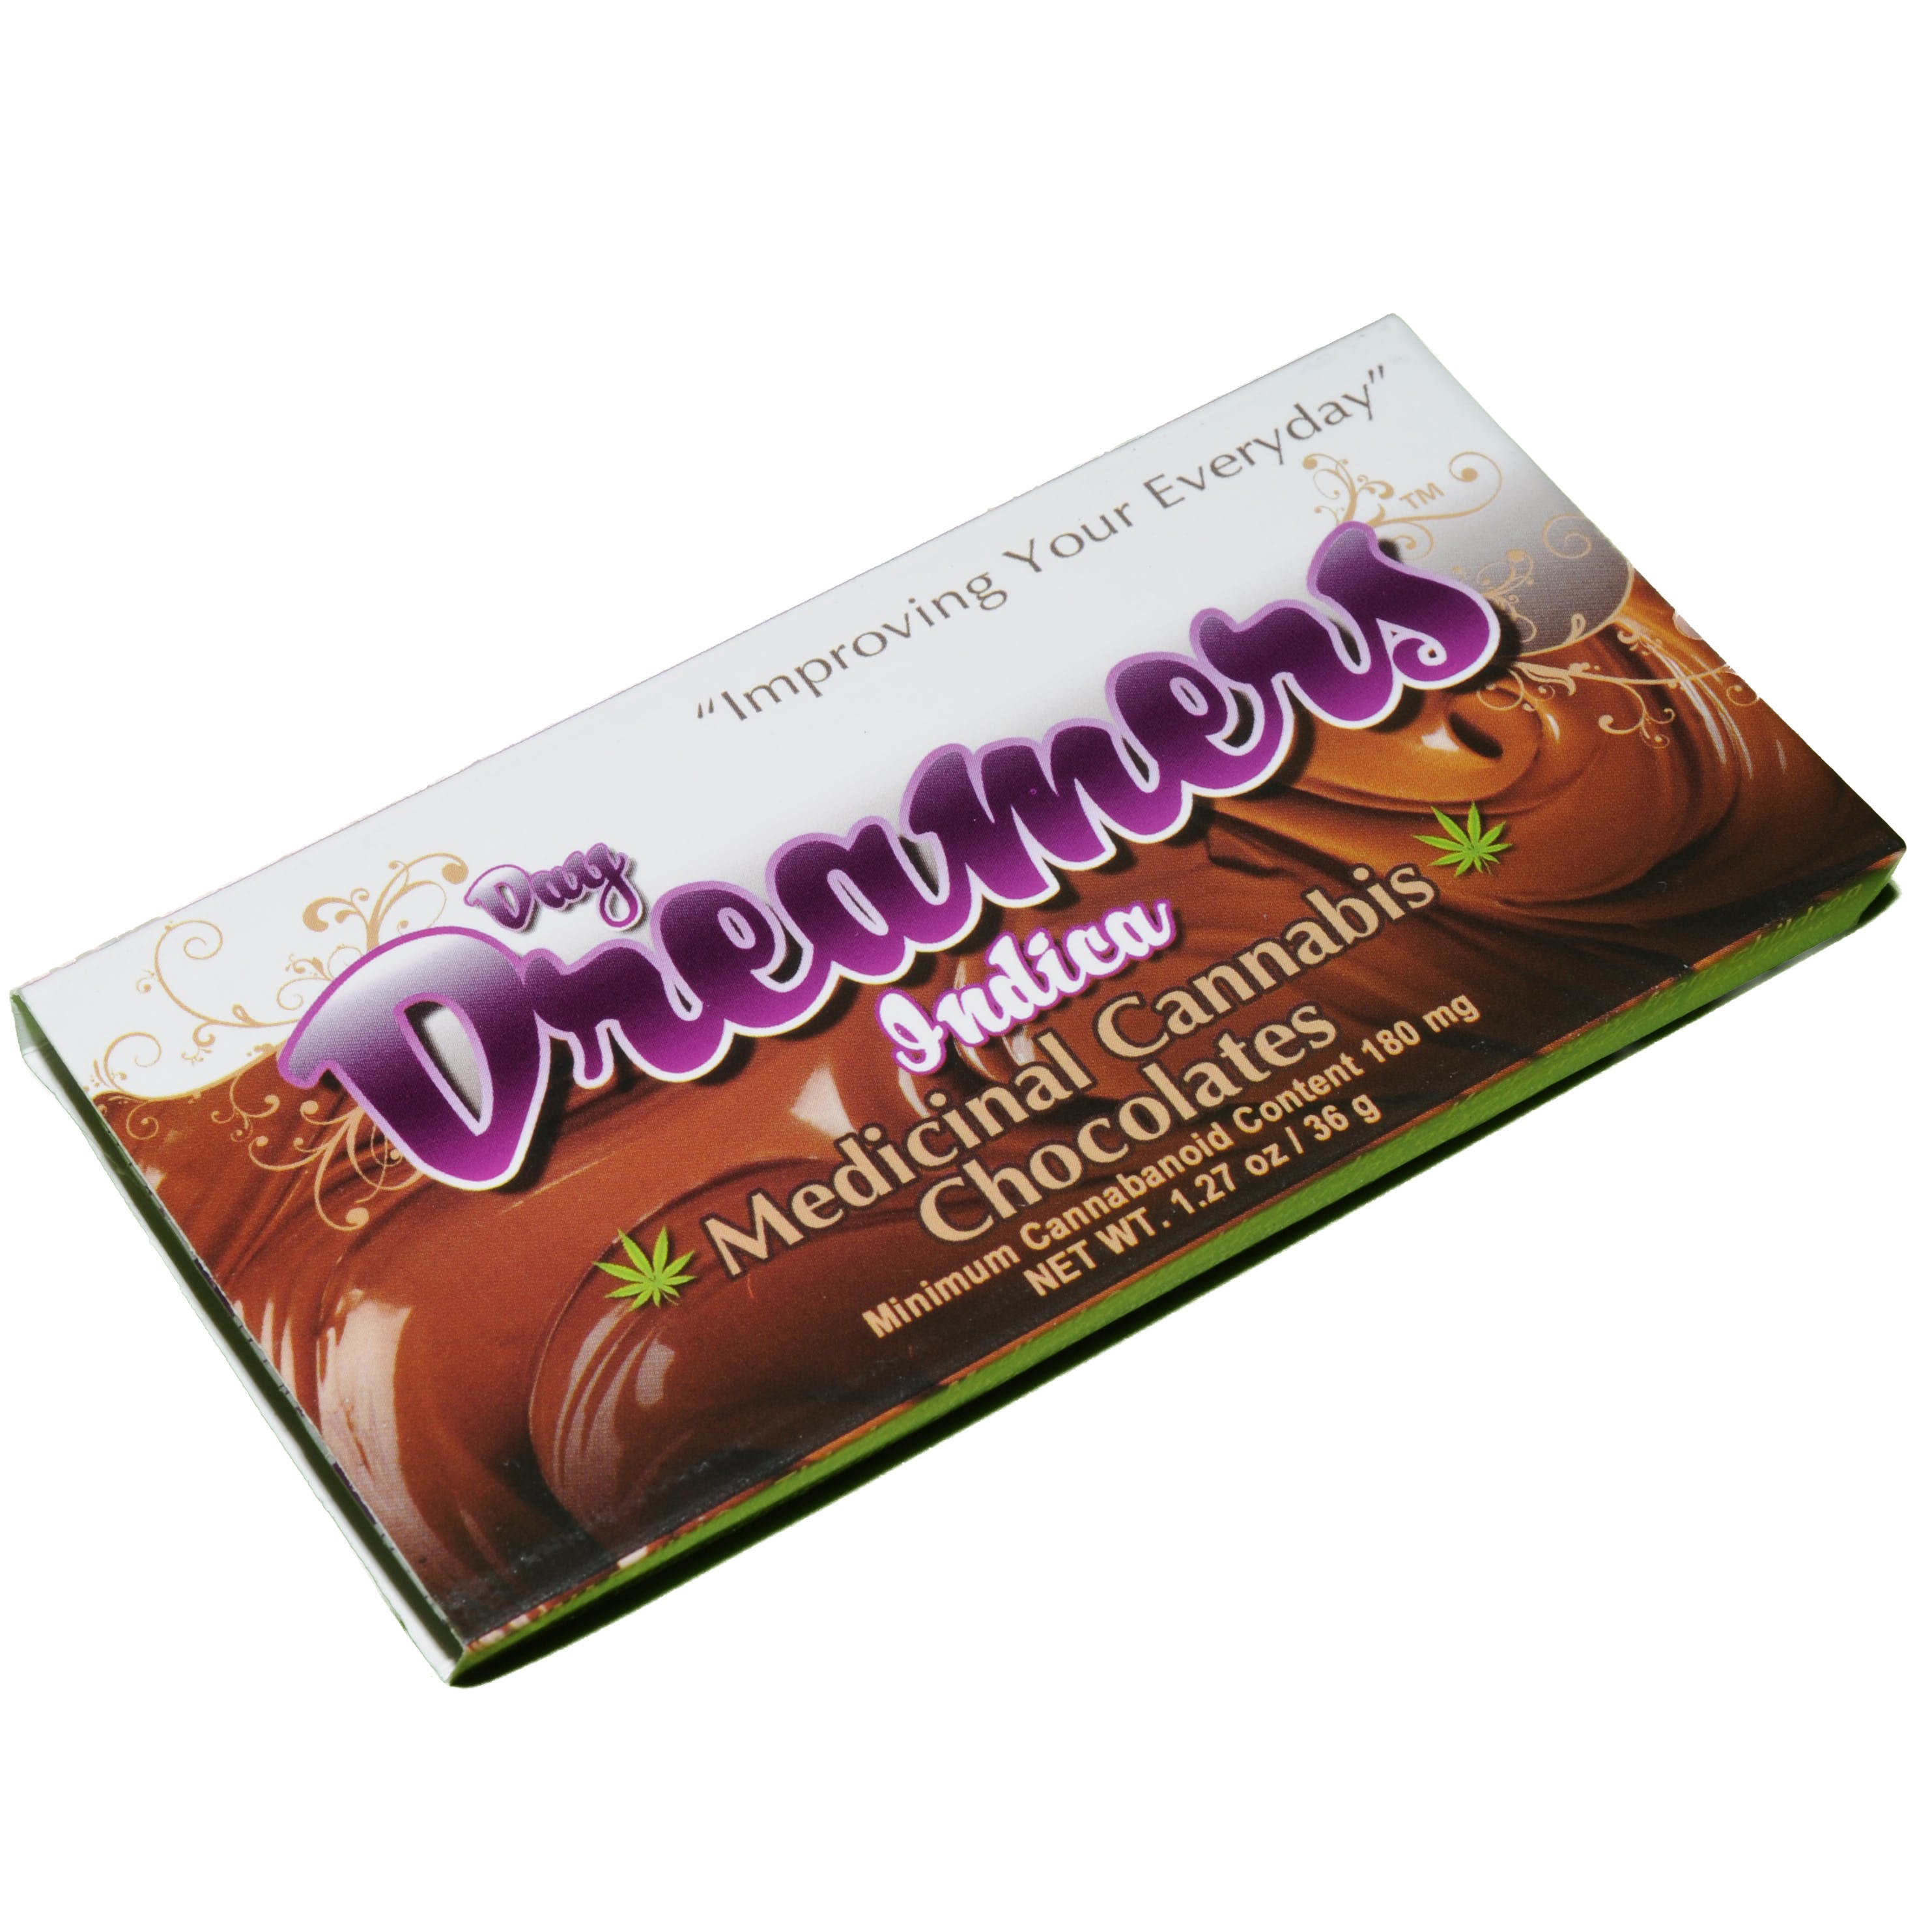 Day Dreamers Medicinal Cannabis Chocolates Indica